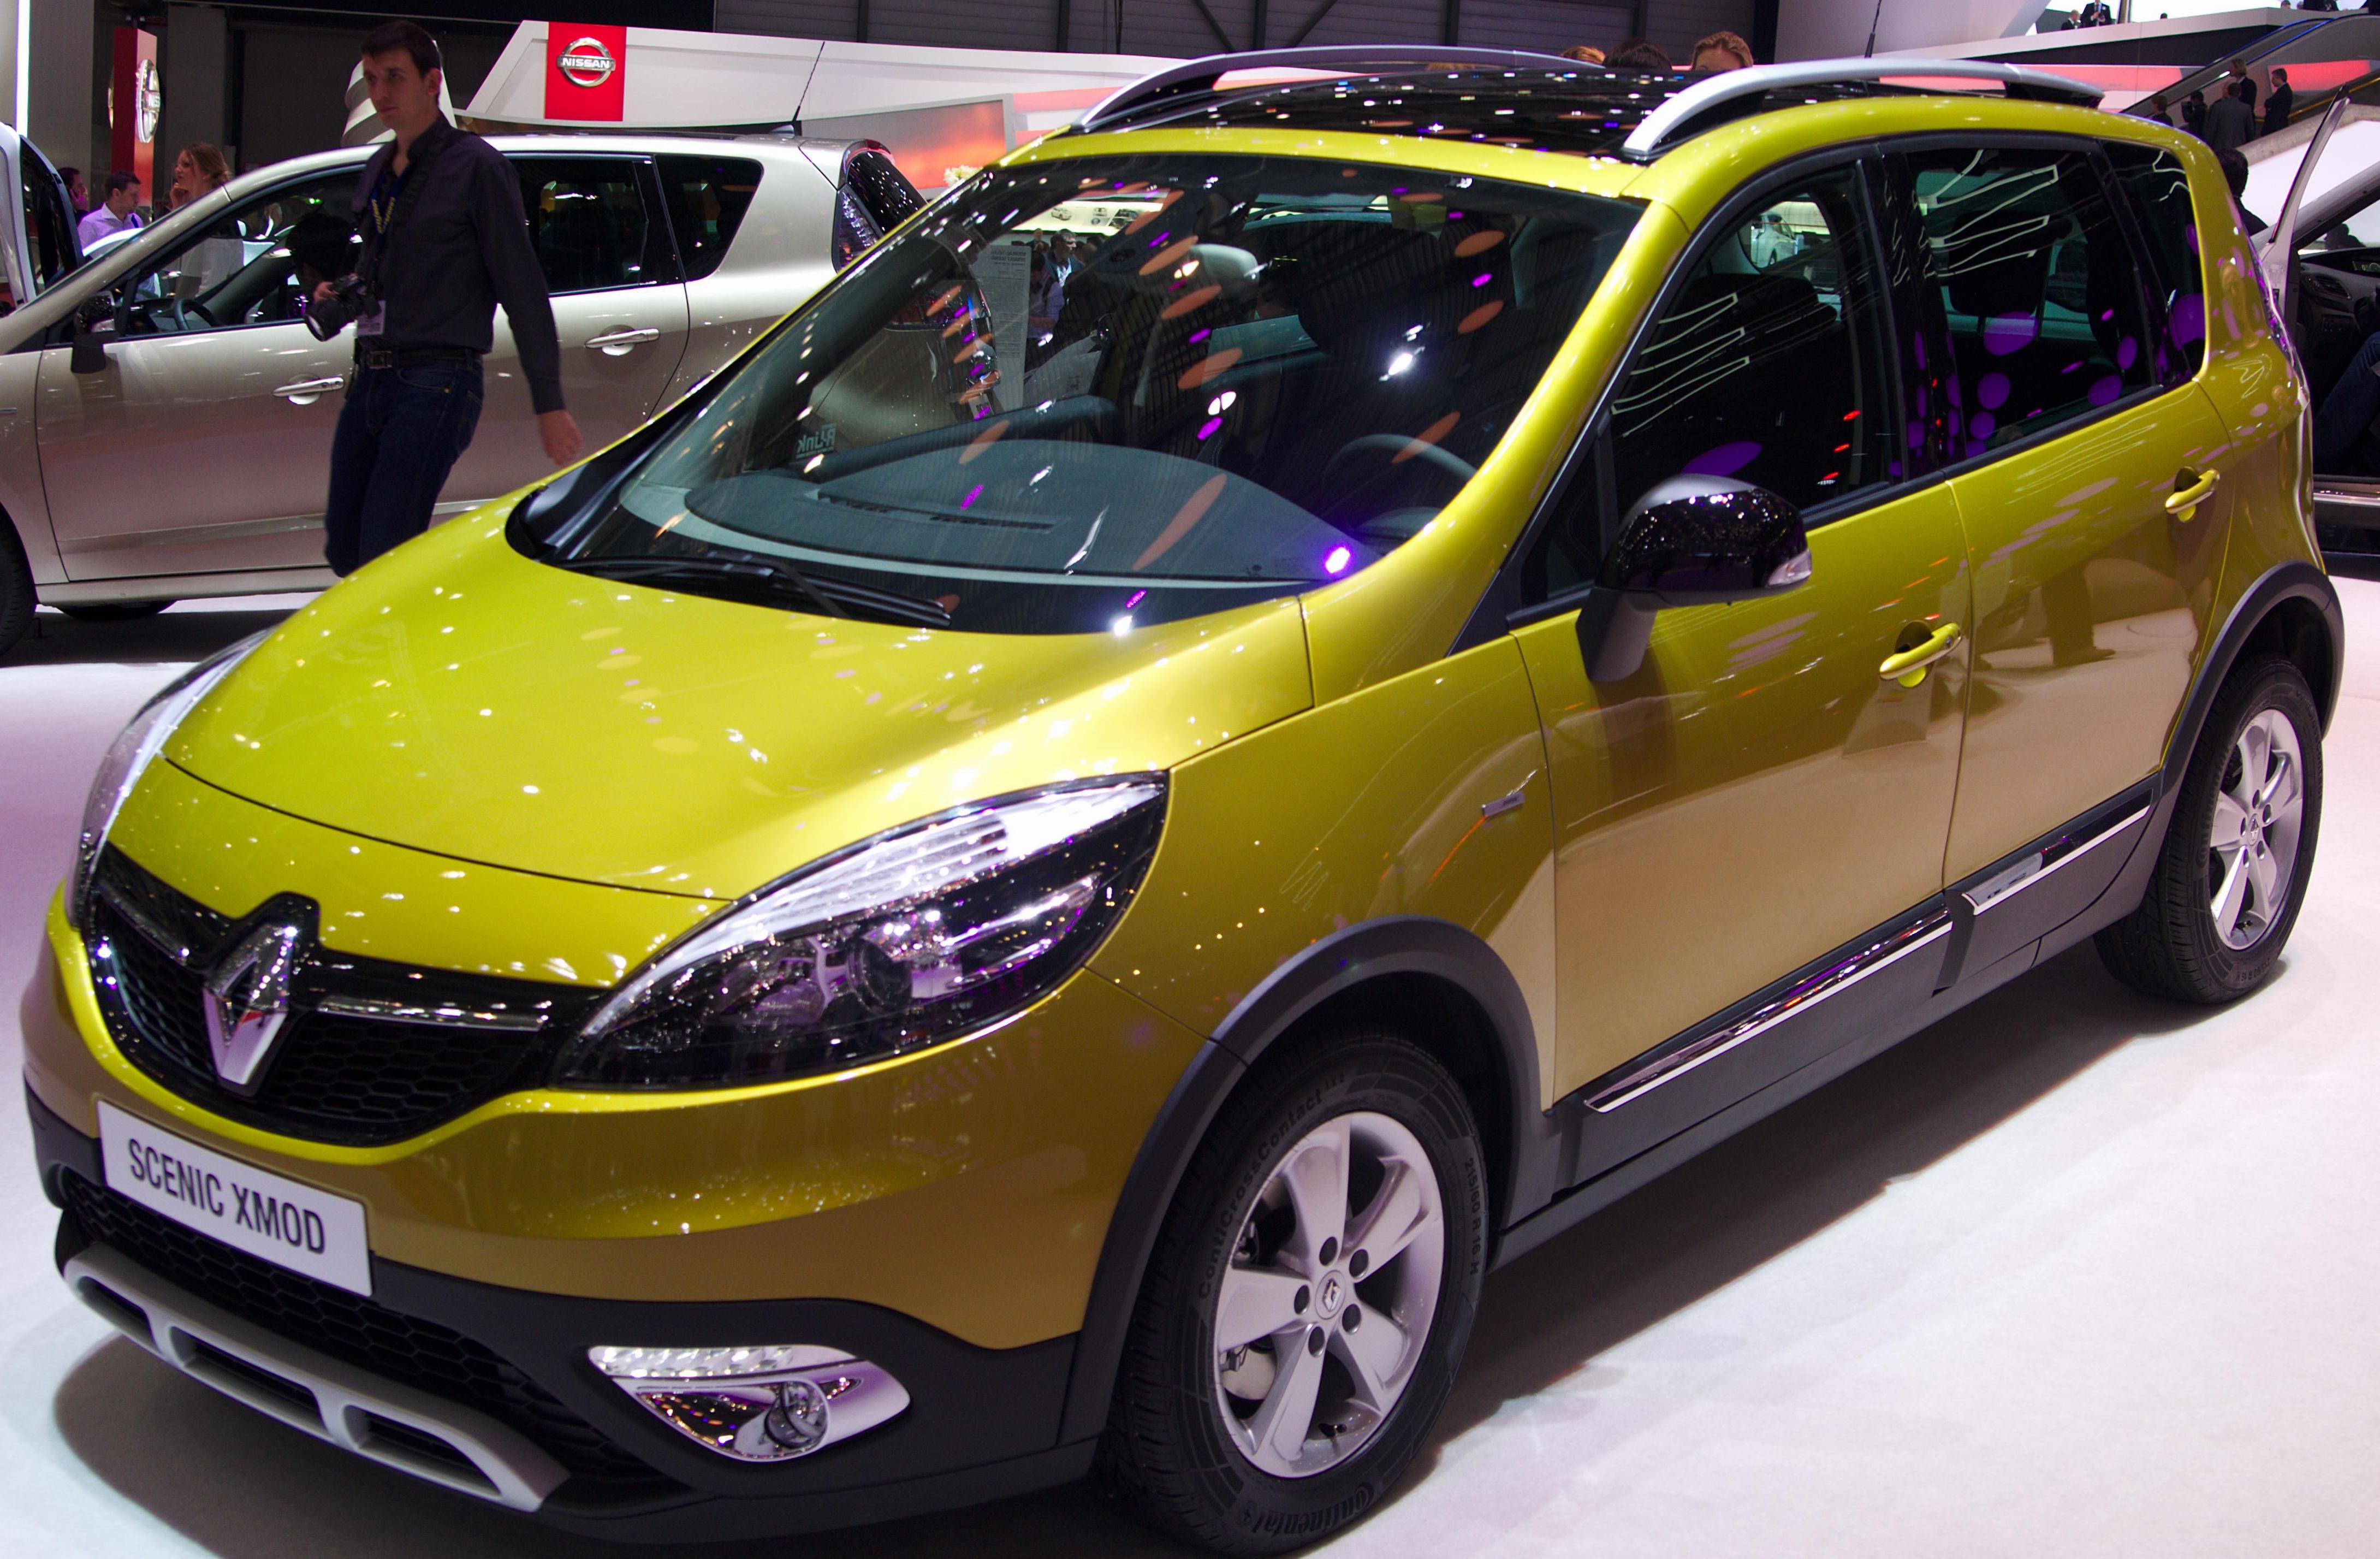 Scenic Xmod Renault price 2011